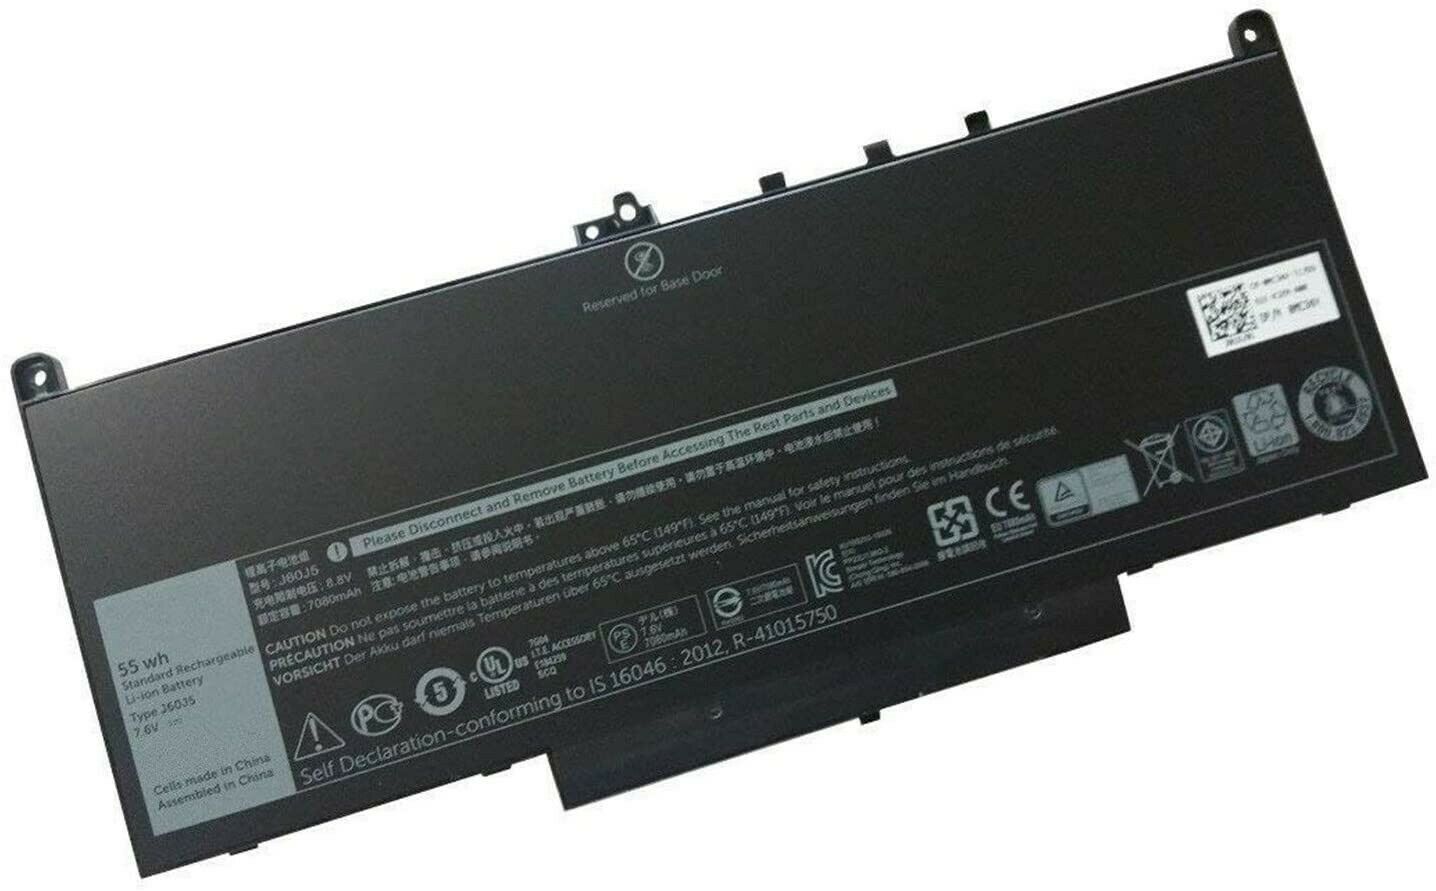 Dell Latitude E7270,E7470 0MC34Y 242WD J60J5 MC34Y (kompatibelt batteri)